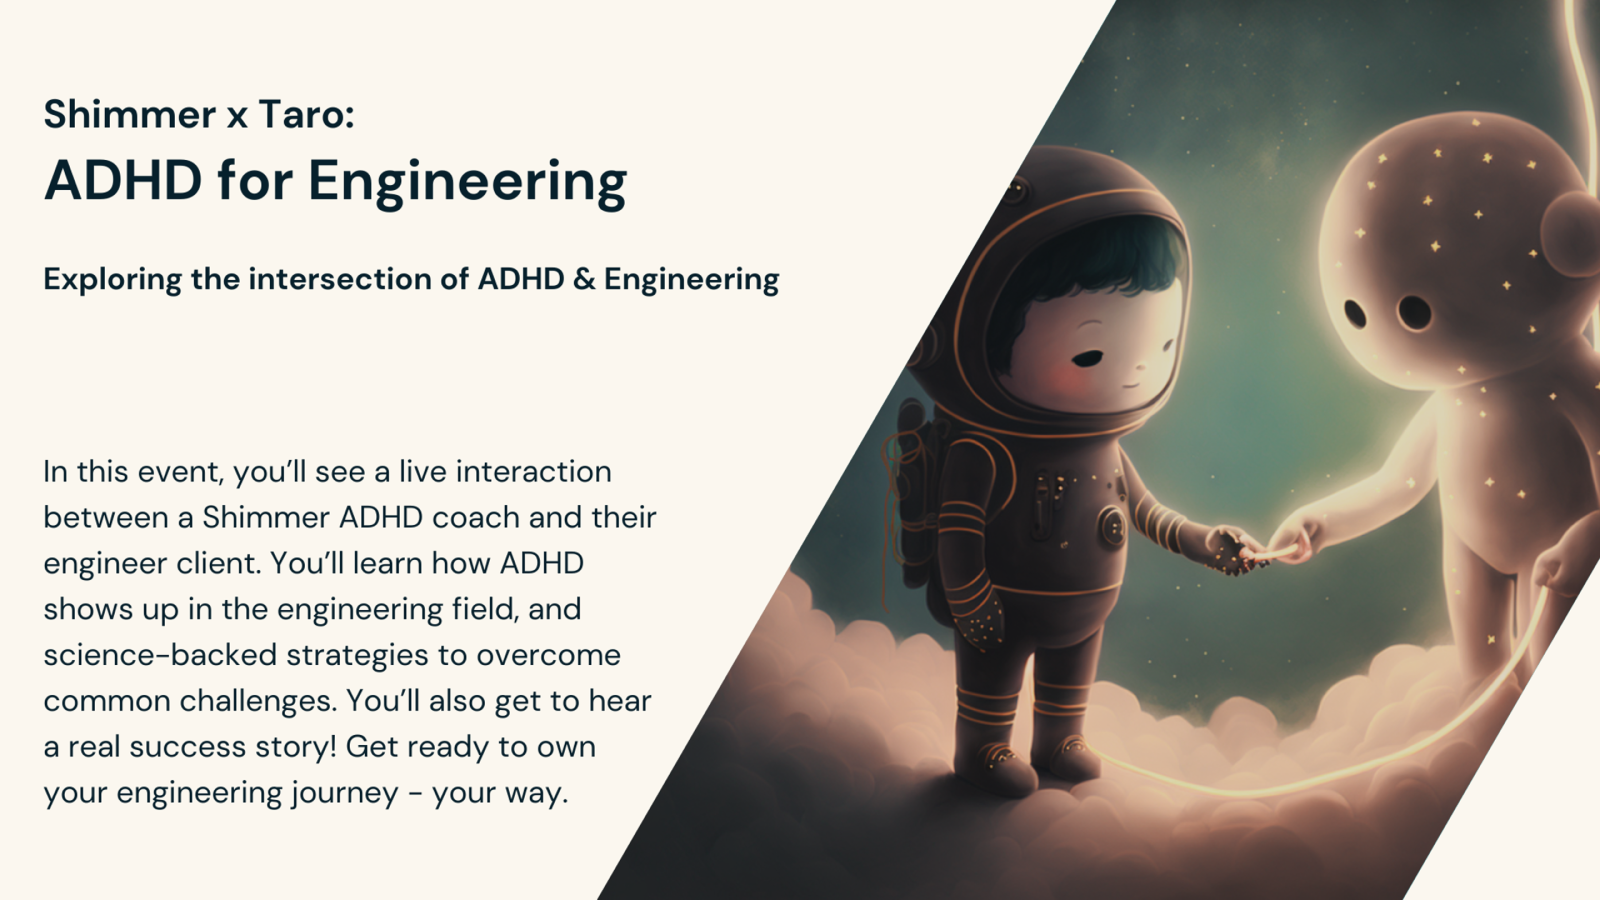 Managing ADHD as an Engineer